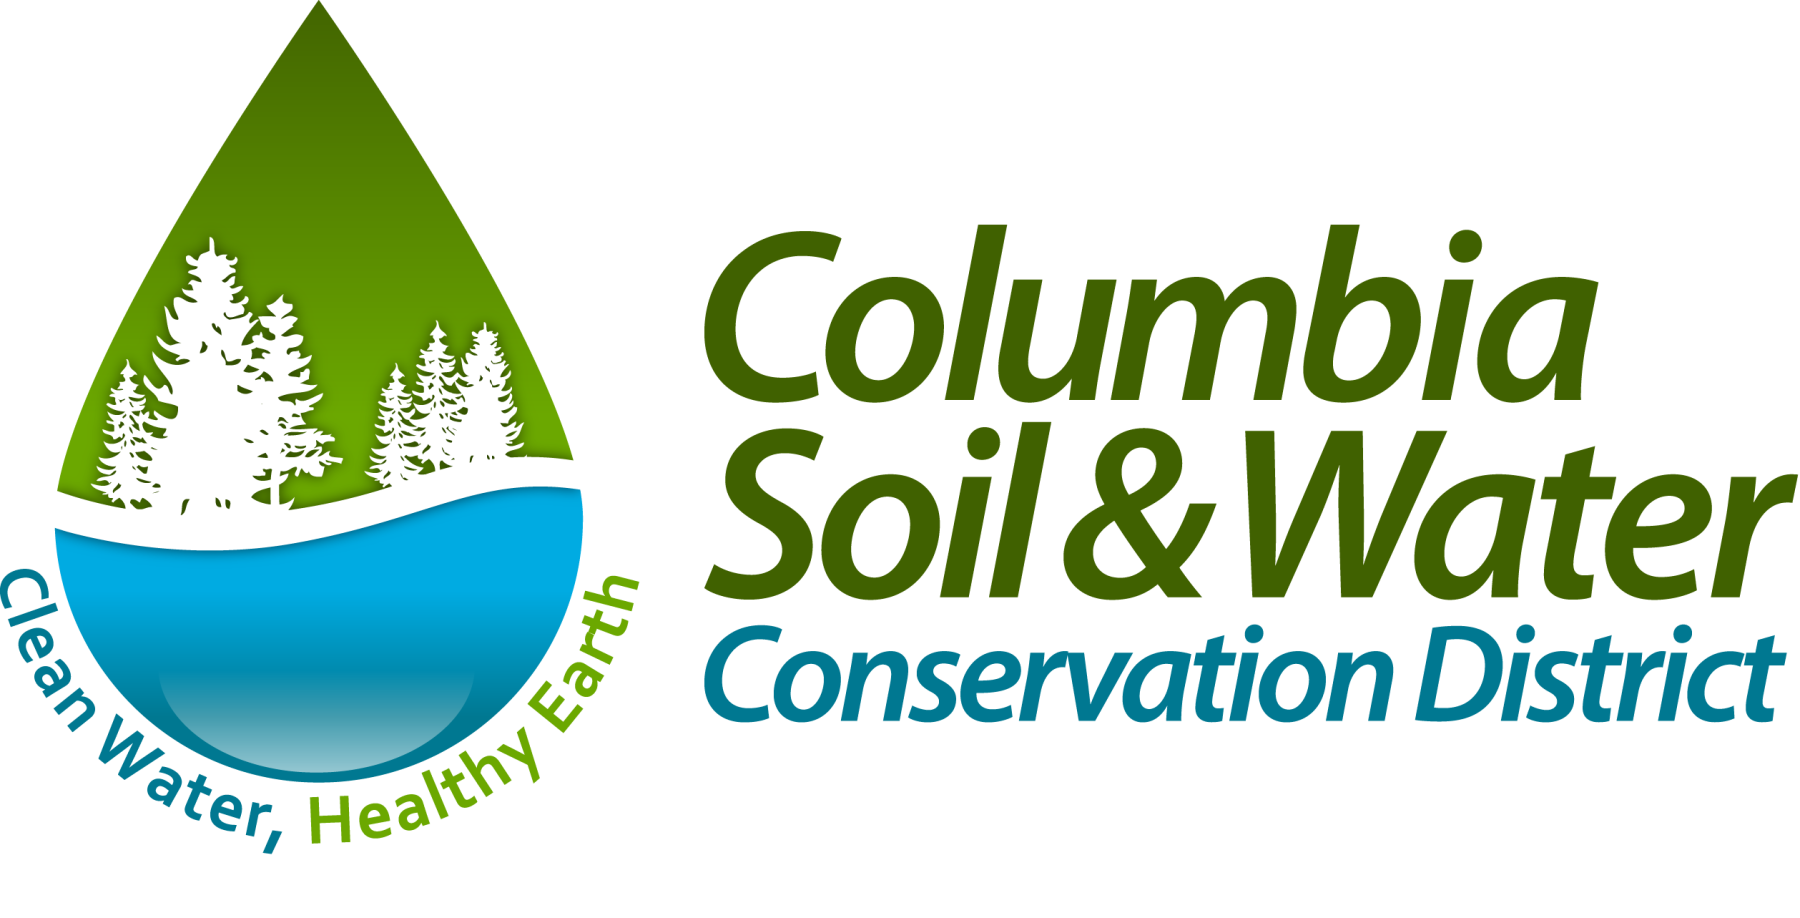 Columbia County SWCD logo